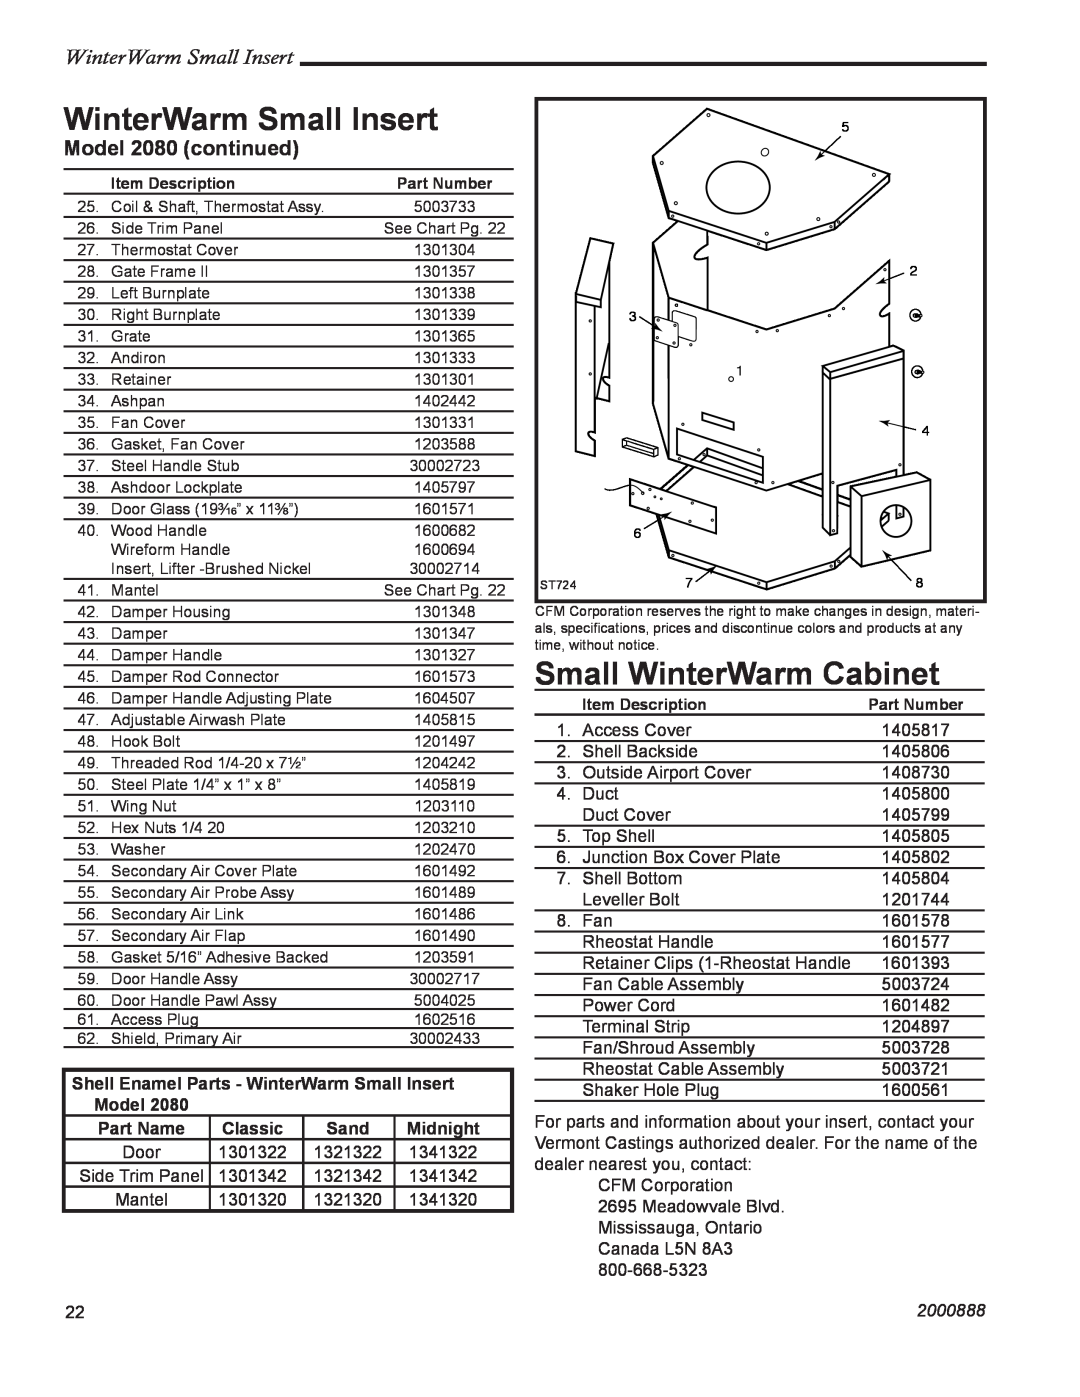 CFM Corporation Winter Warm - Small Insert Model 2080 continued, WinterWarm Small Insert, Small WinterWarm Cabinet 